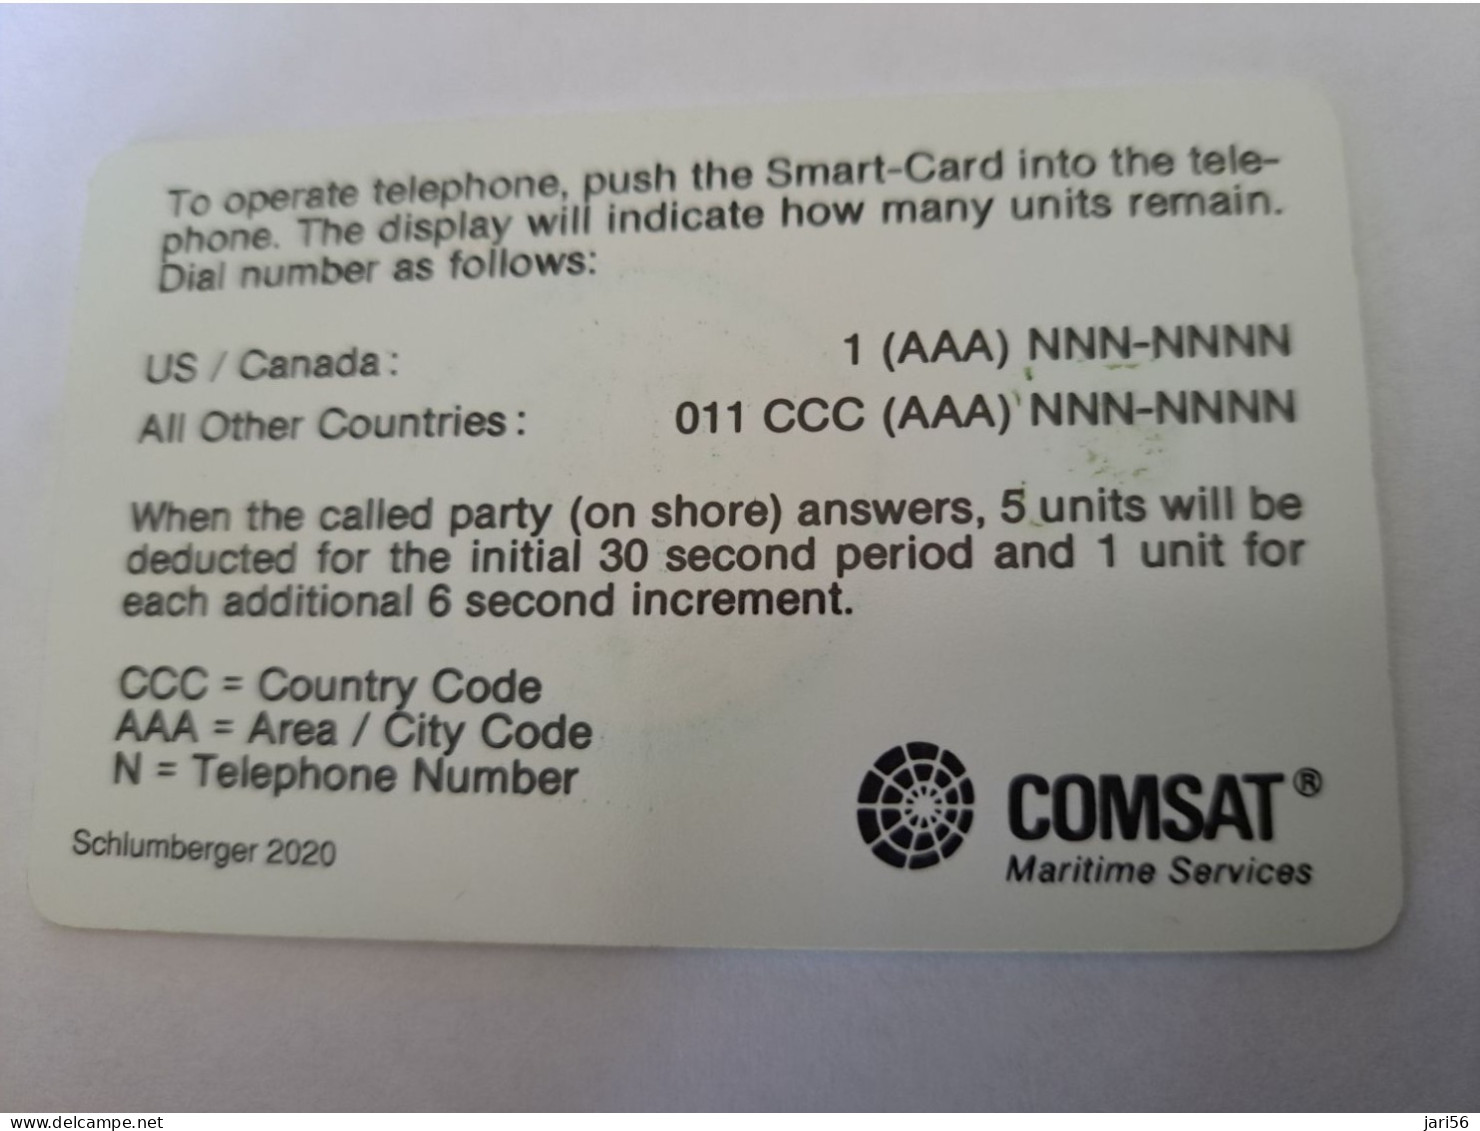 USA  / COMSAT / CHIP CARD  100 UNITS 10 MINUTES COMSAT : COM13A 100u COMSAT SI-6 (ctrl 2020) USED   **13107** - [2] Tarjetas Con Chip